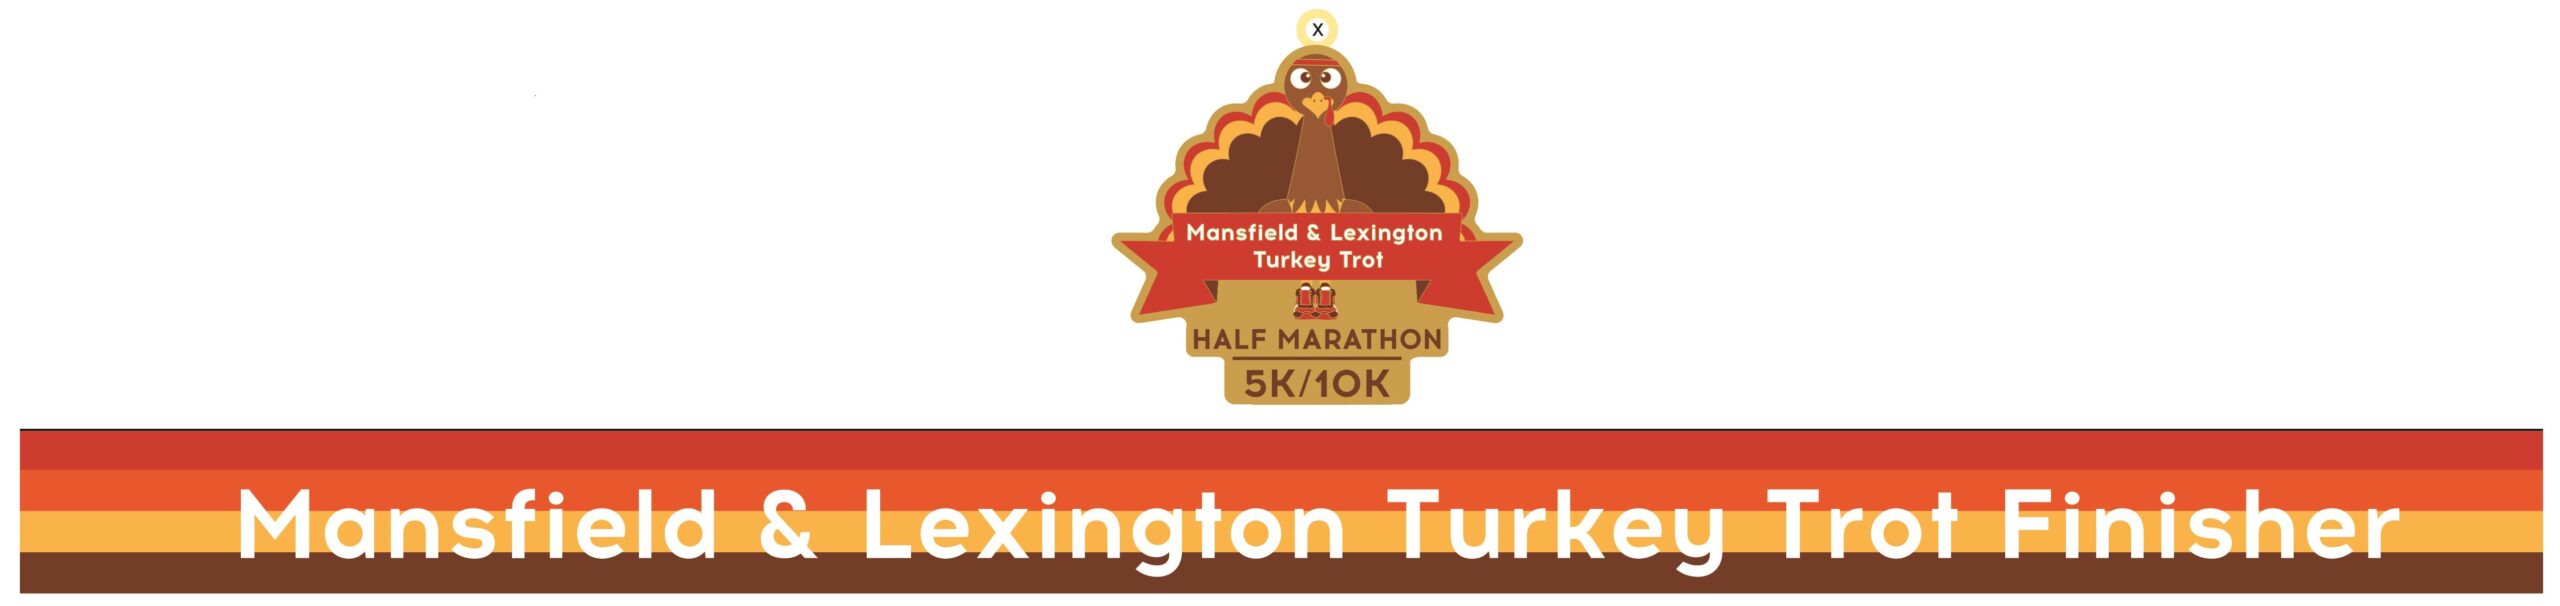 Mansfield and Lexington Turkey Trot Finishers Medal and Custom Satin Neck Ribbon - 5k, 10k and Half Marathon